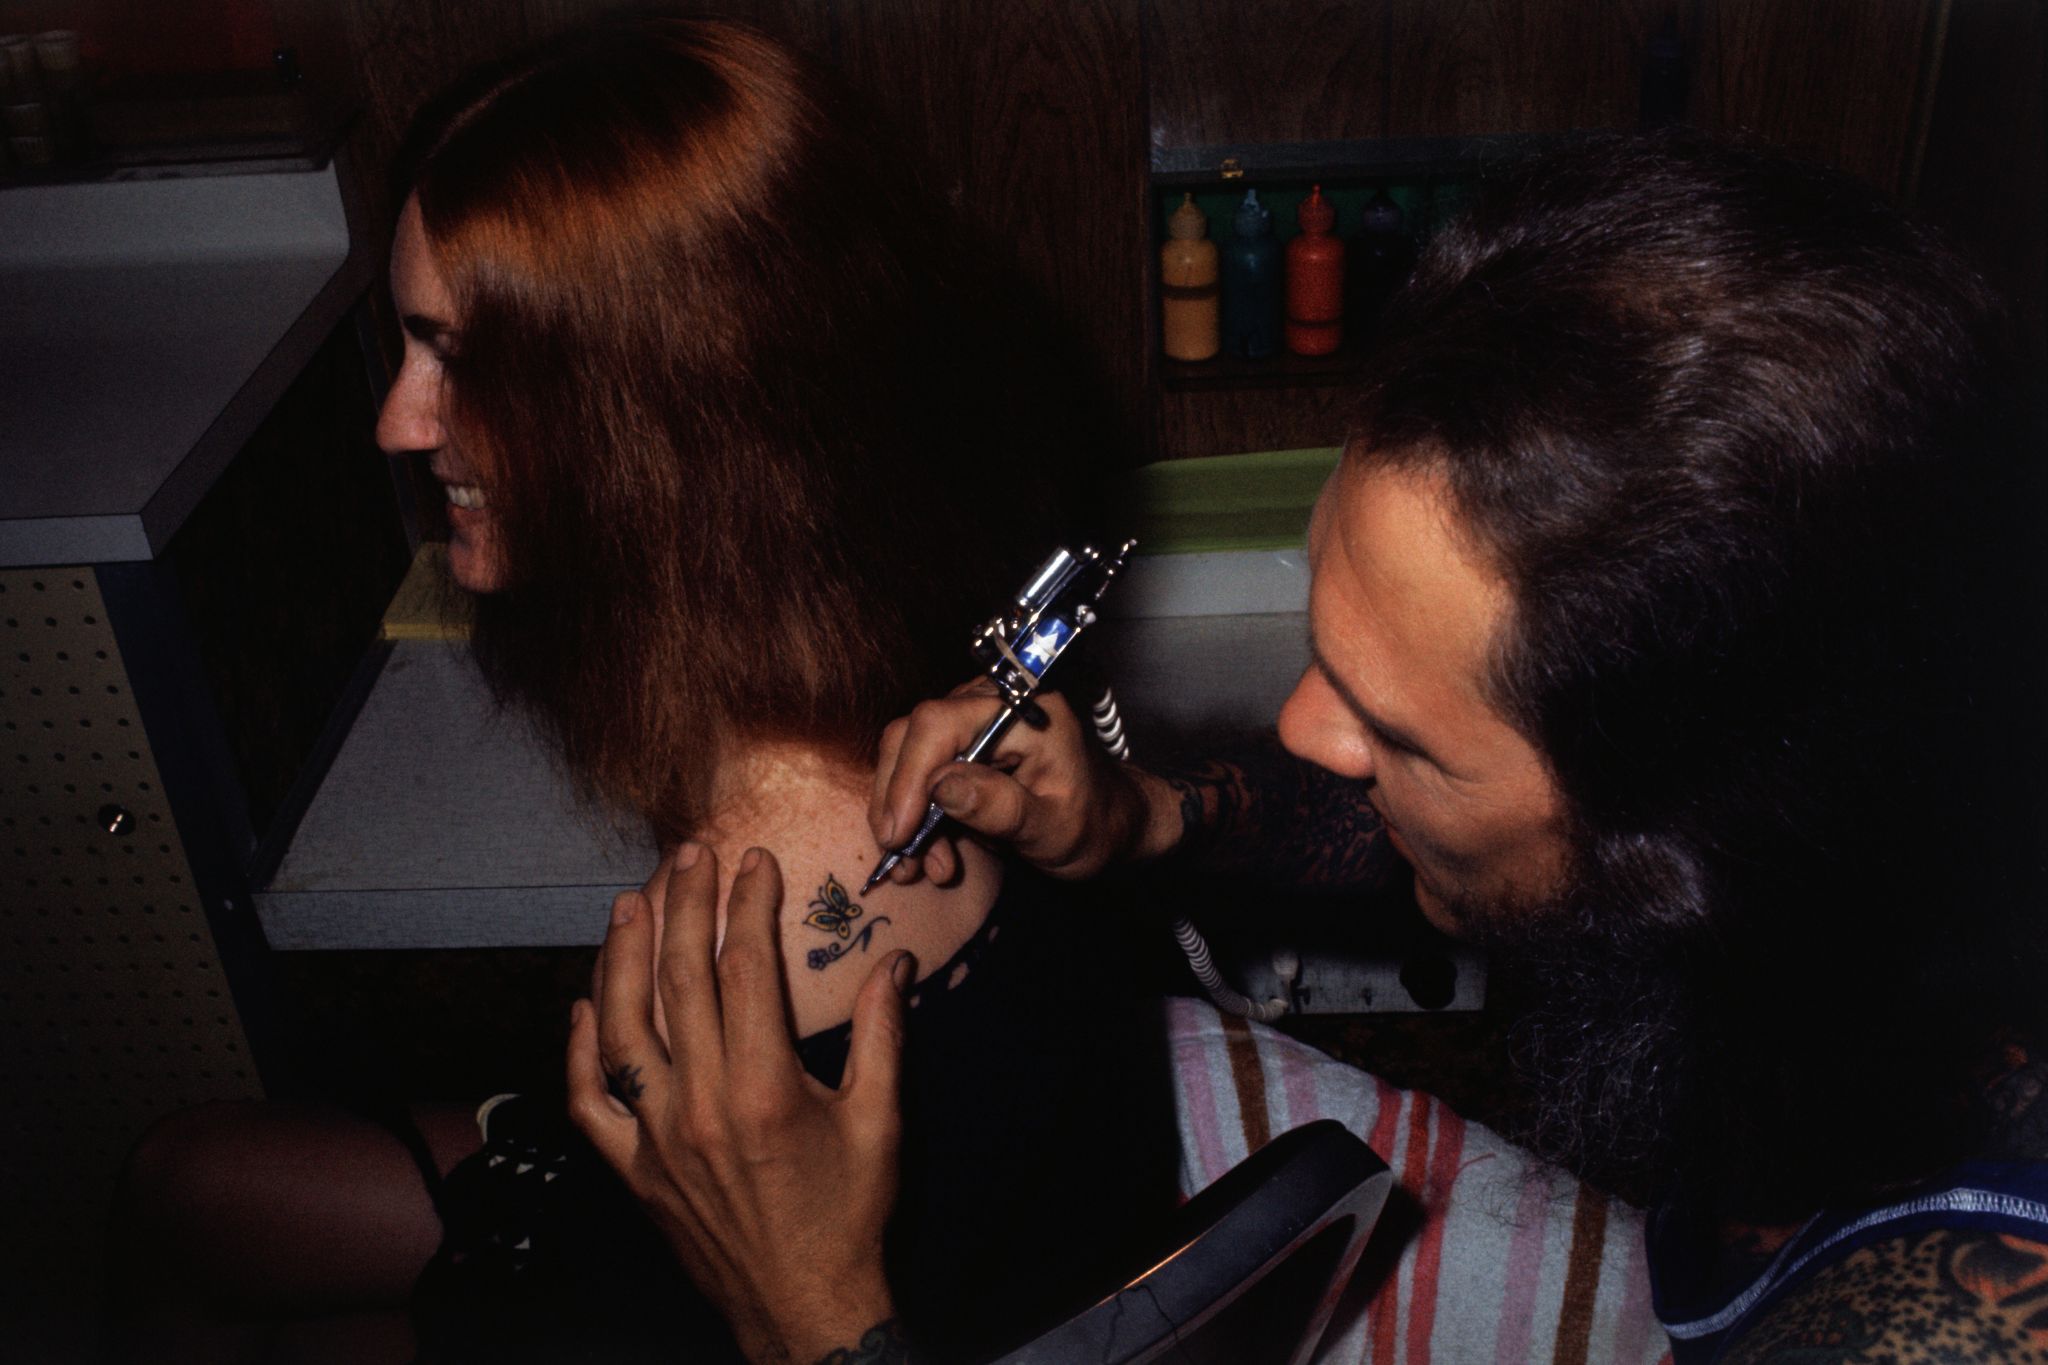 Janis Joplin: The First Tattooed Celebrity • Tattoodo